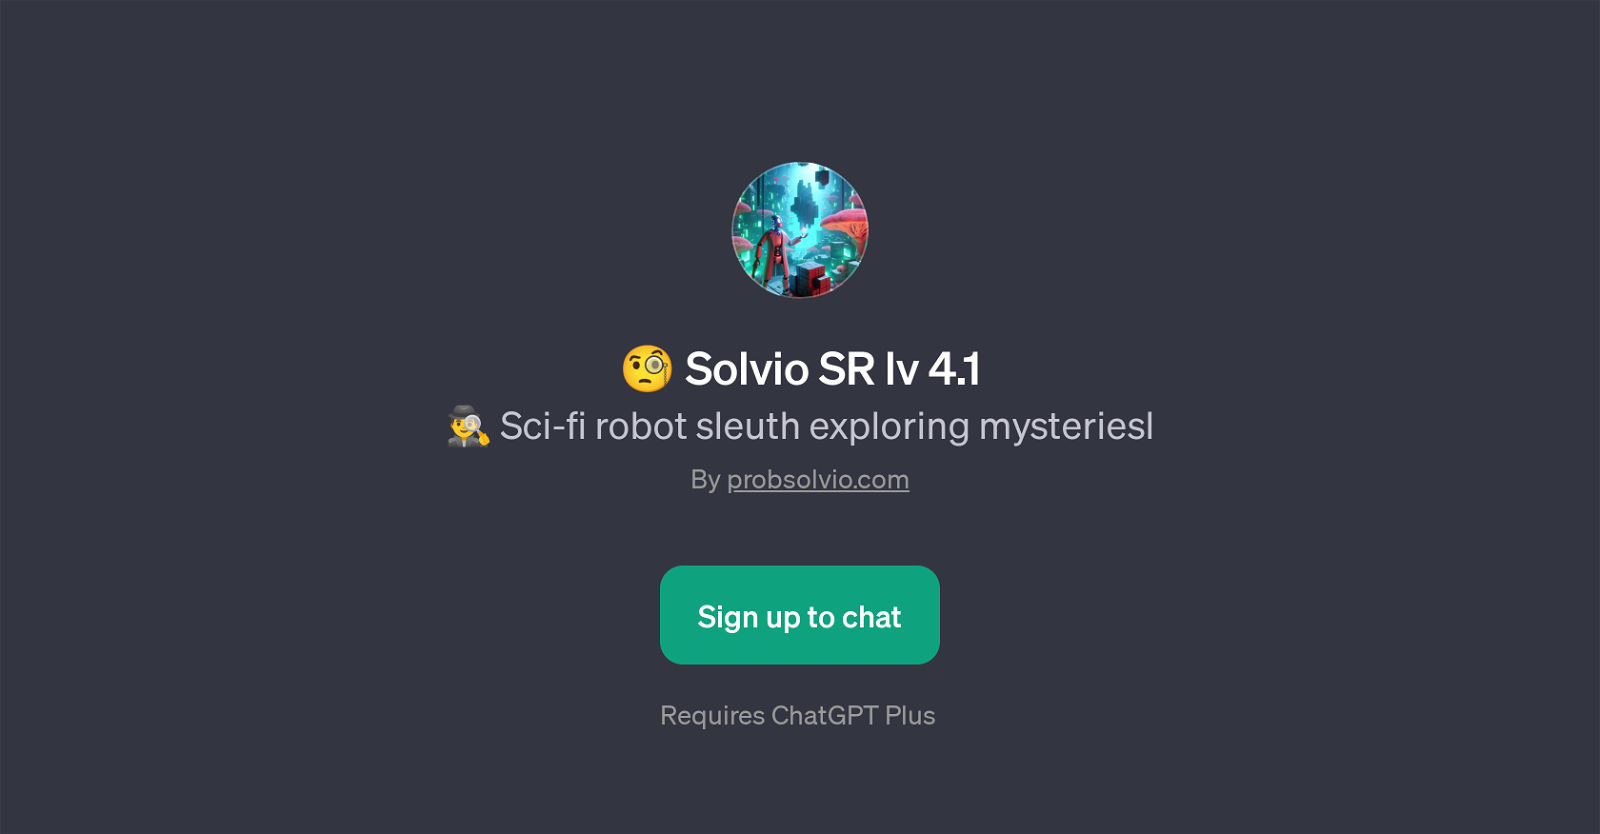 Solvio SR lv 4.1 website